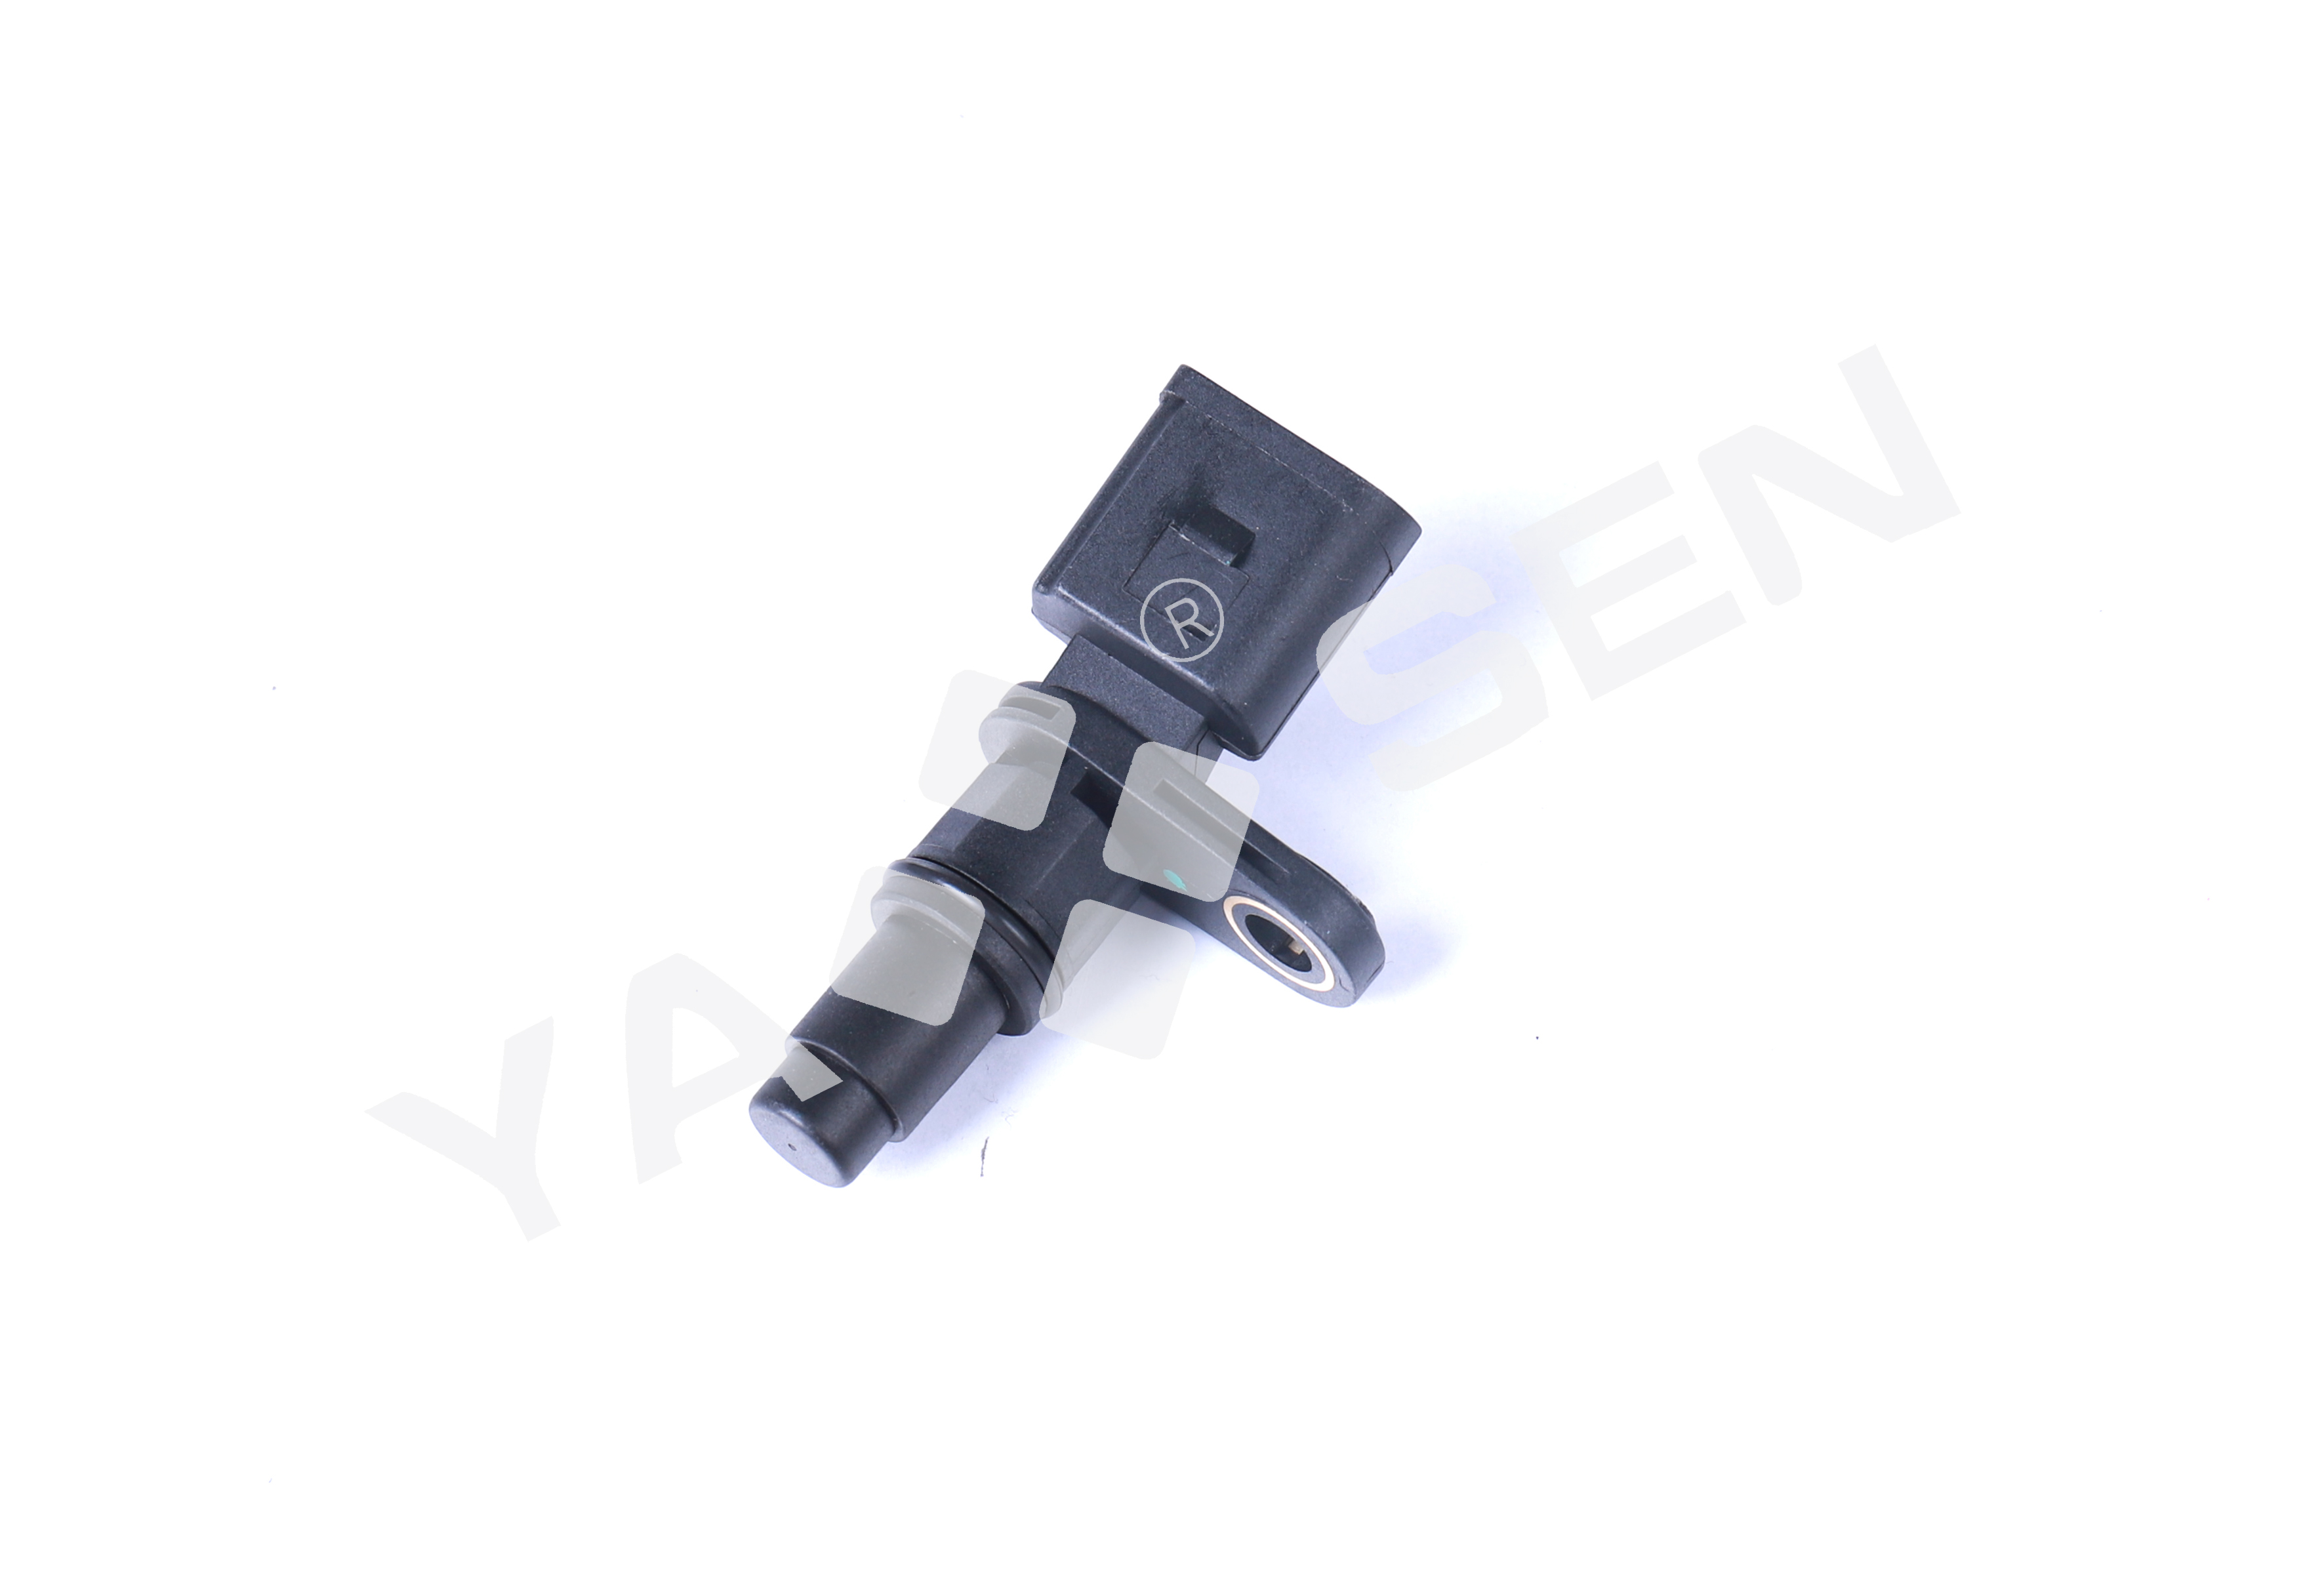 Auto Camshaft position sensor FOR AUDI/VW/SEAT/SKODA, 070907601B 070907601A 070907601 80254172066 4005503 71-5291 5S7397 8025417